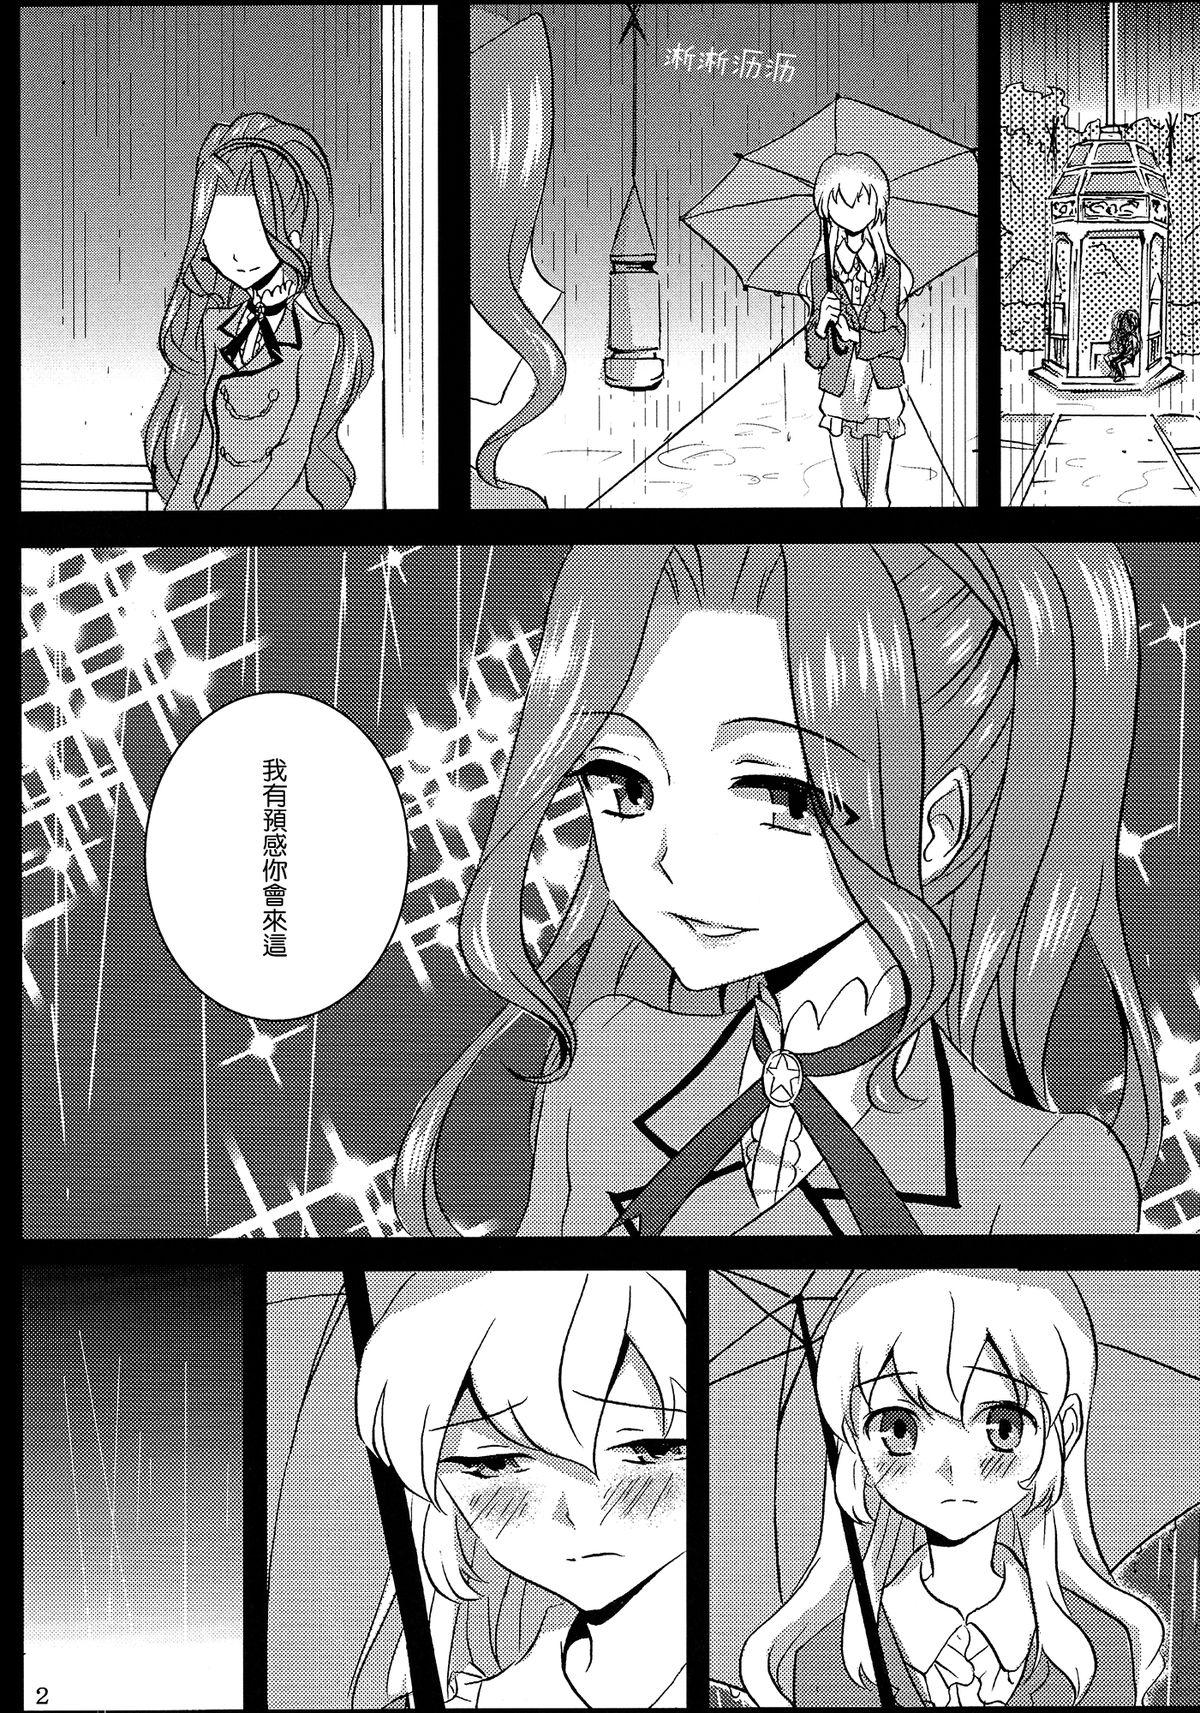 Exotic rainy day - Aikatsu Groupsex - Page 4